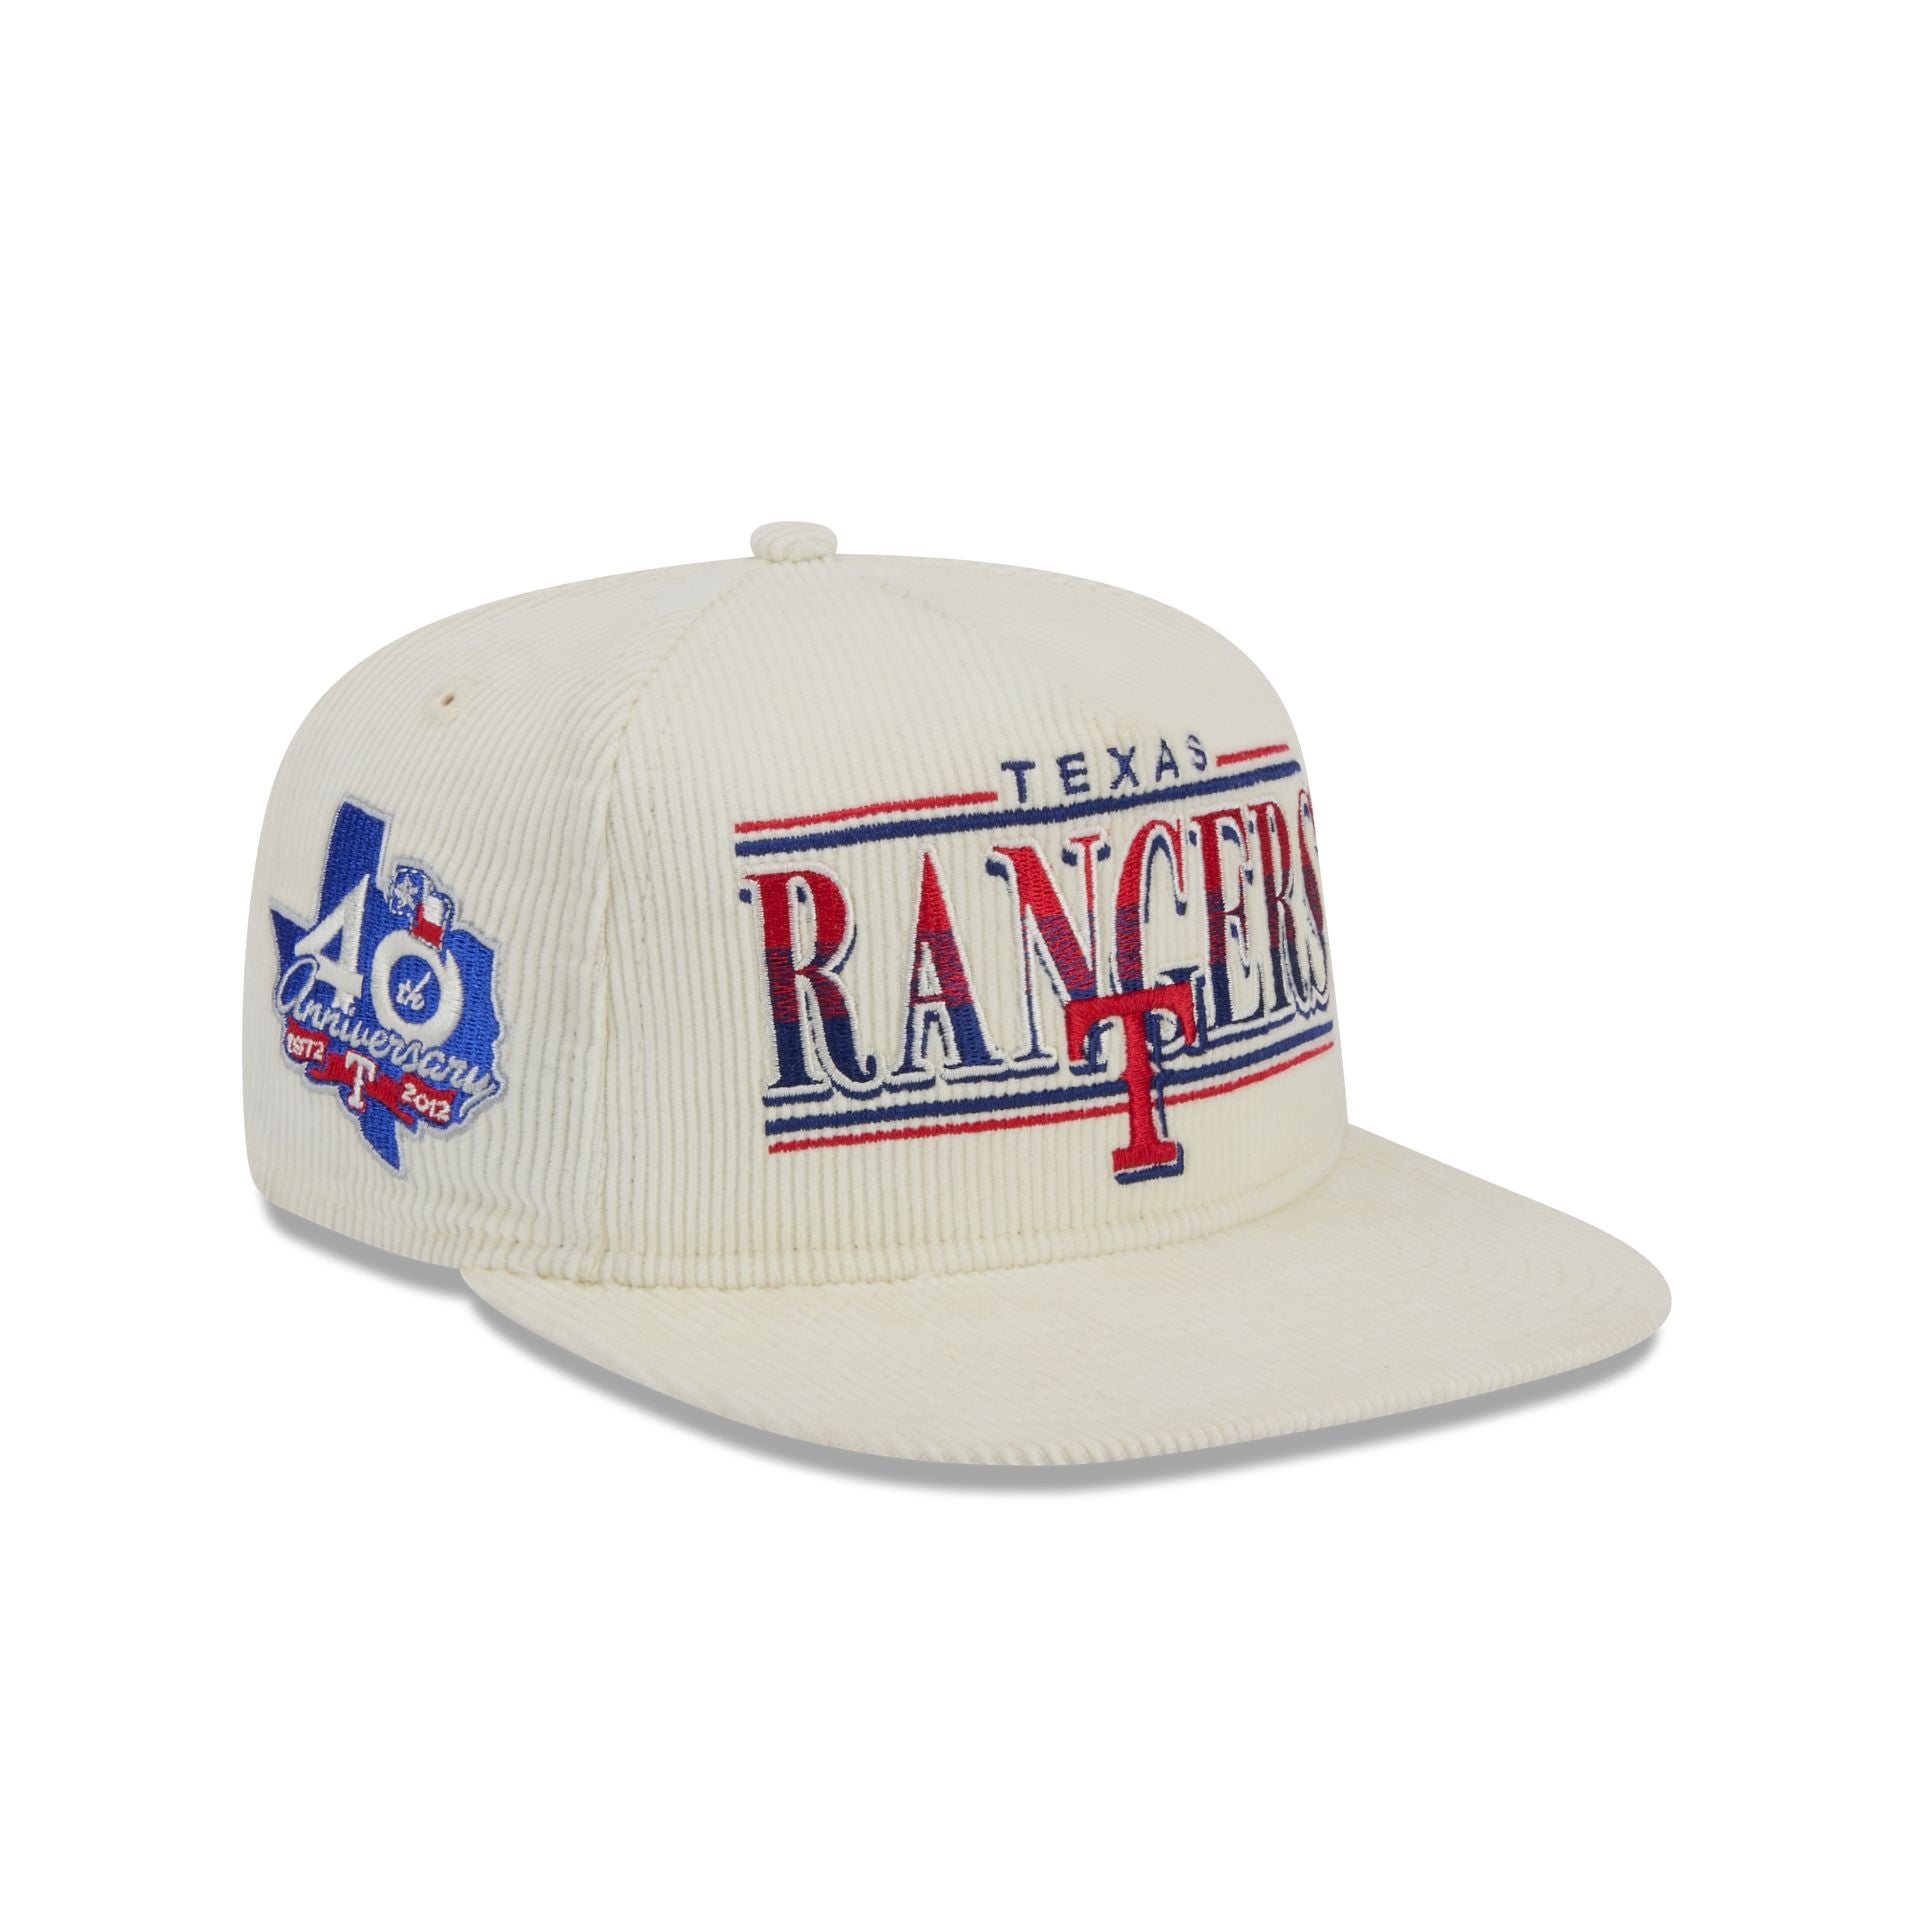 Texas Rangers Throwback Corduroy Golfer Hat, White, MLB by New Era